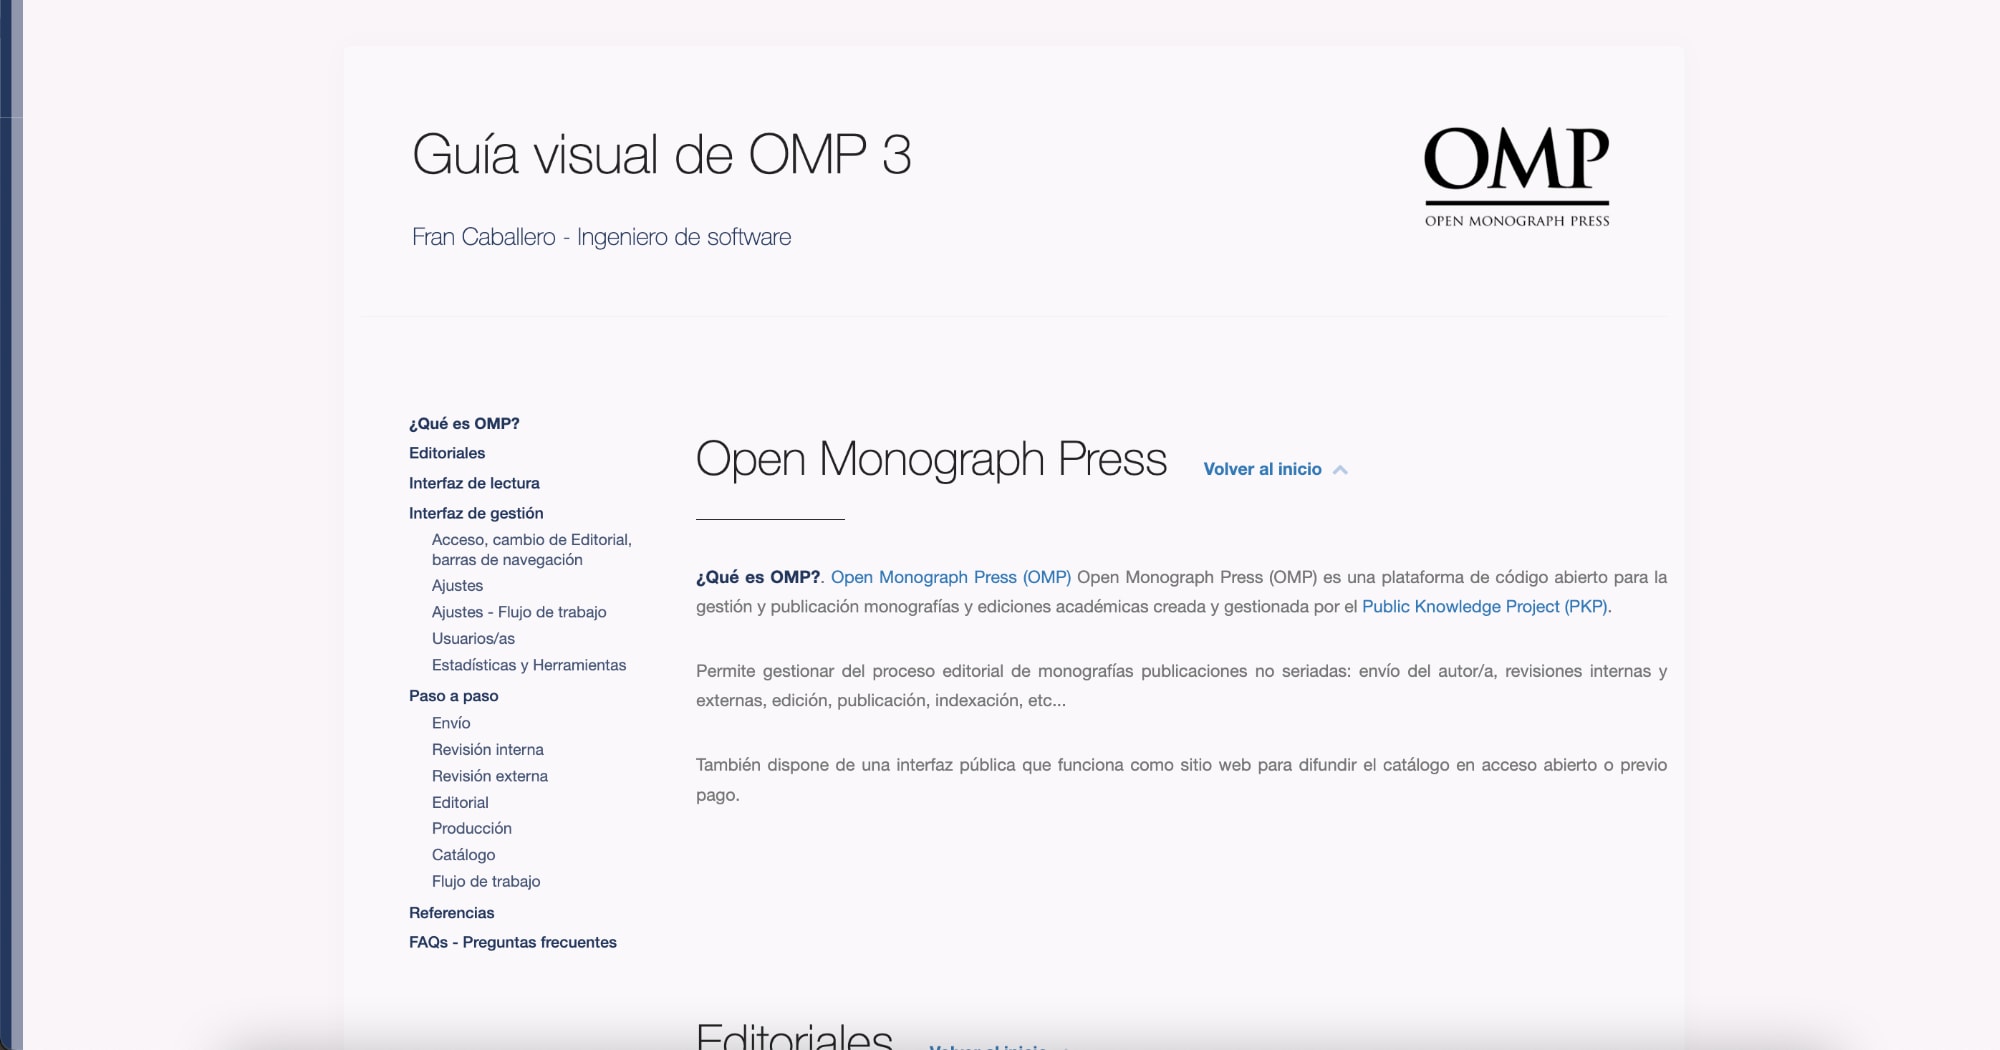 Open Monograph Press (OMP) - Public Knowledge Project